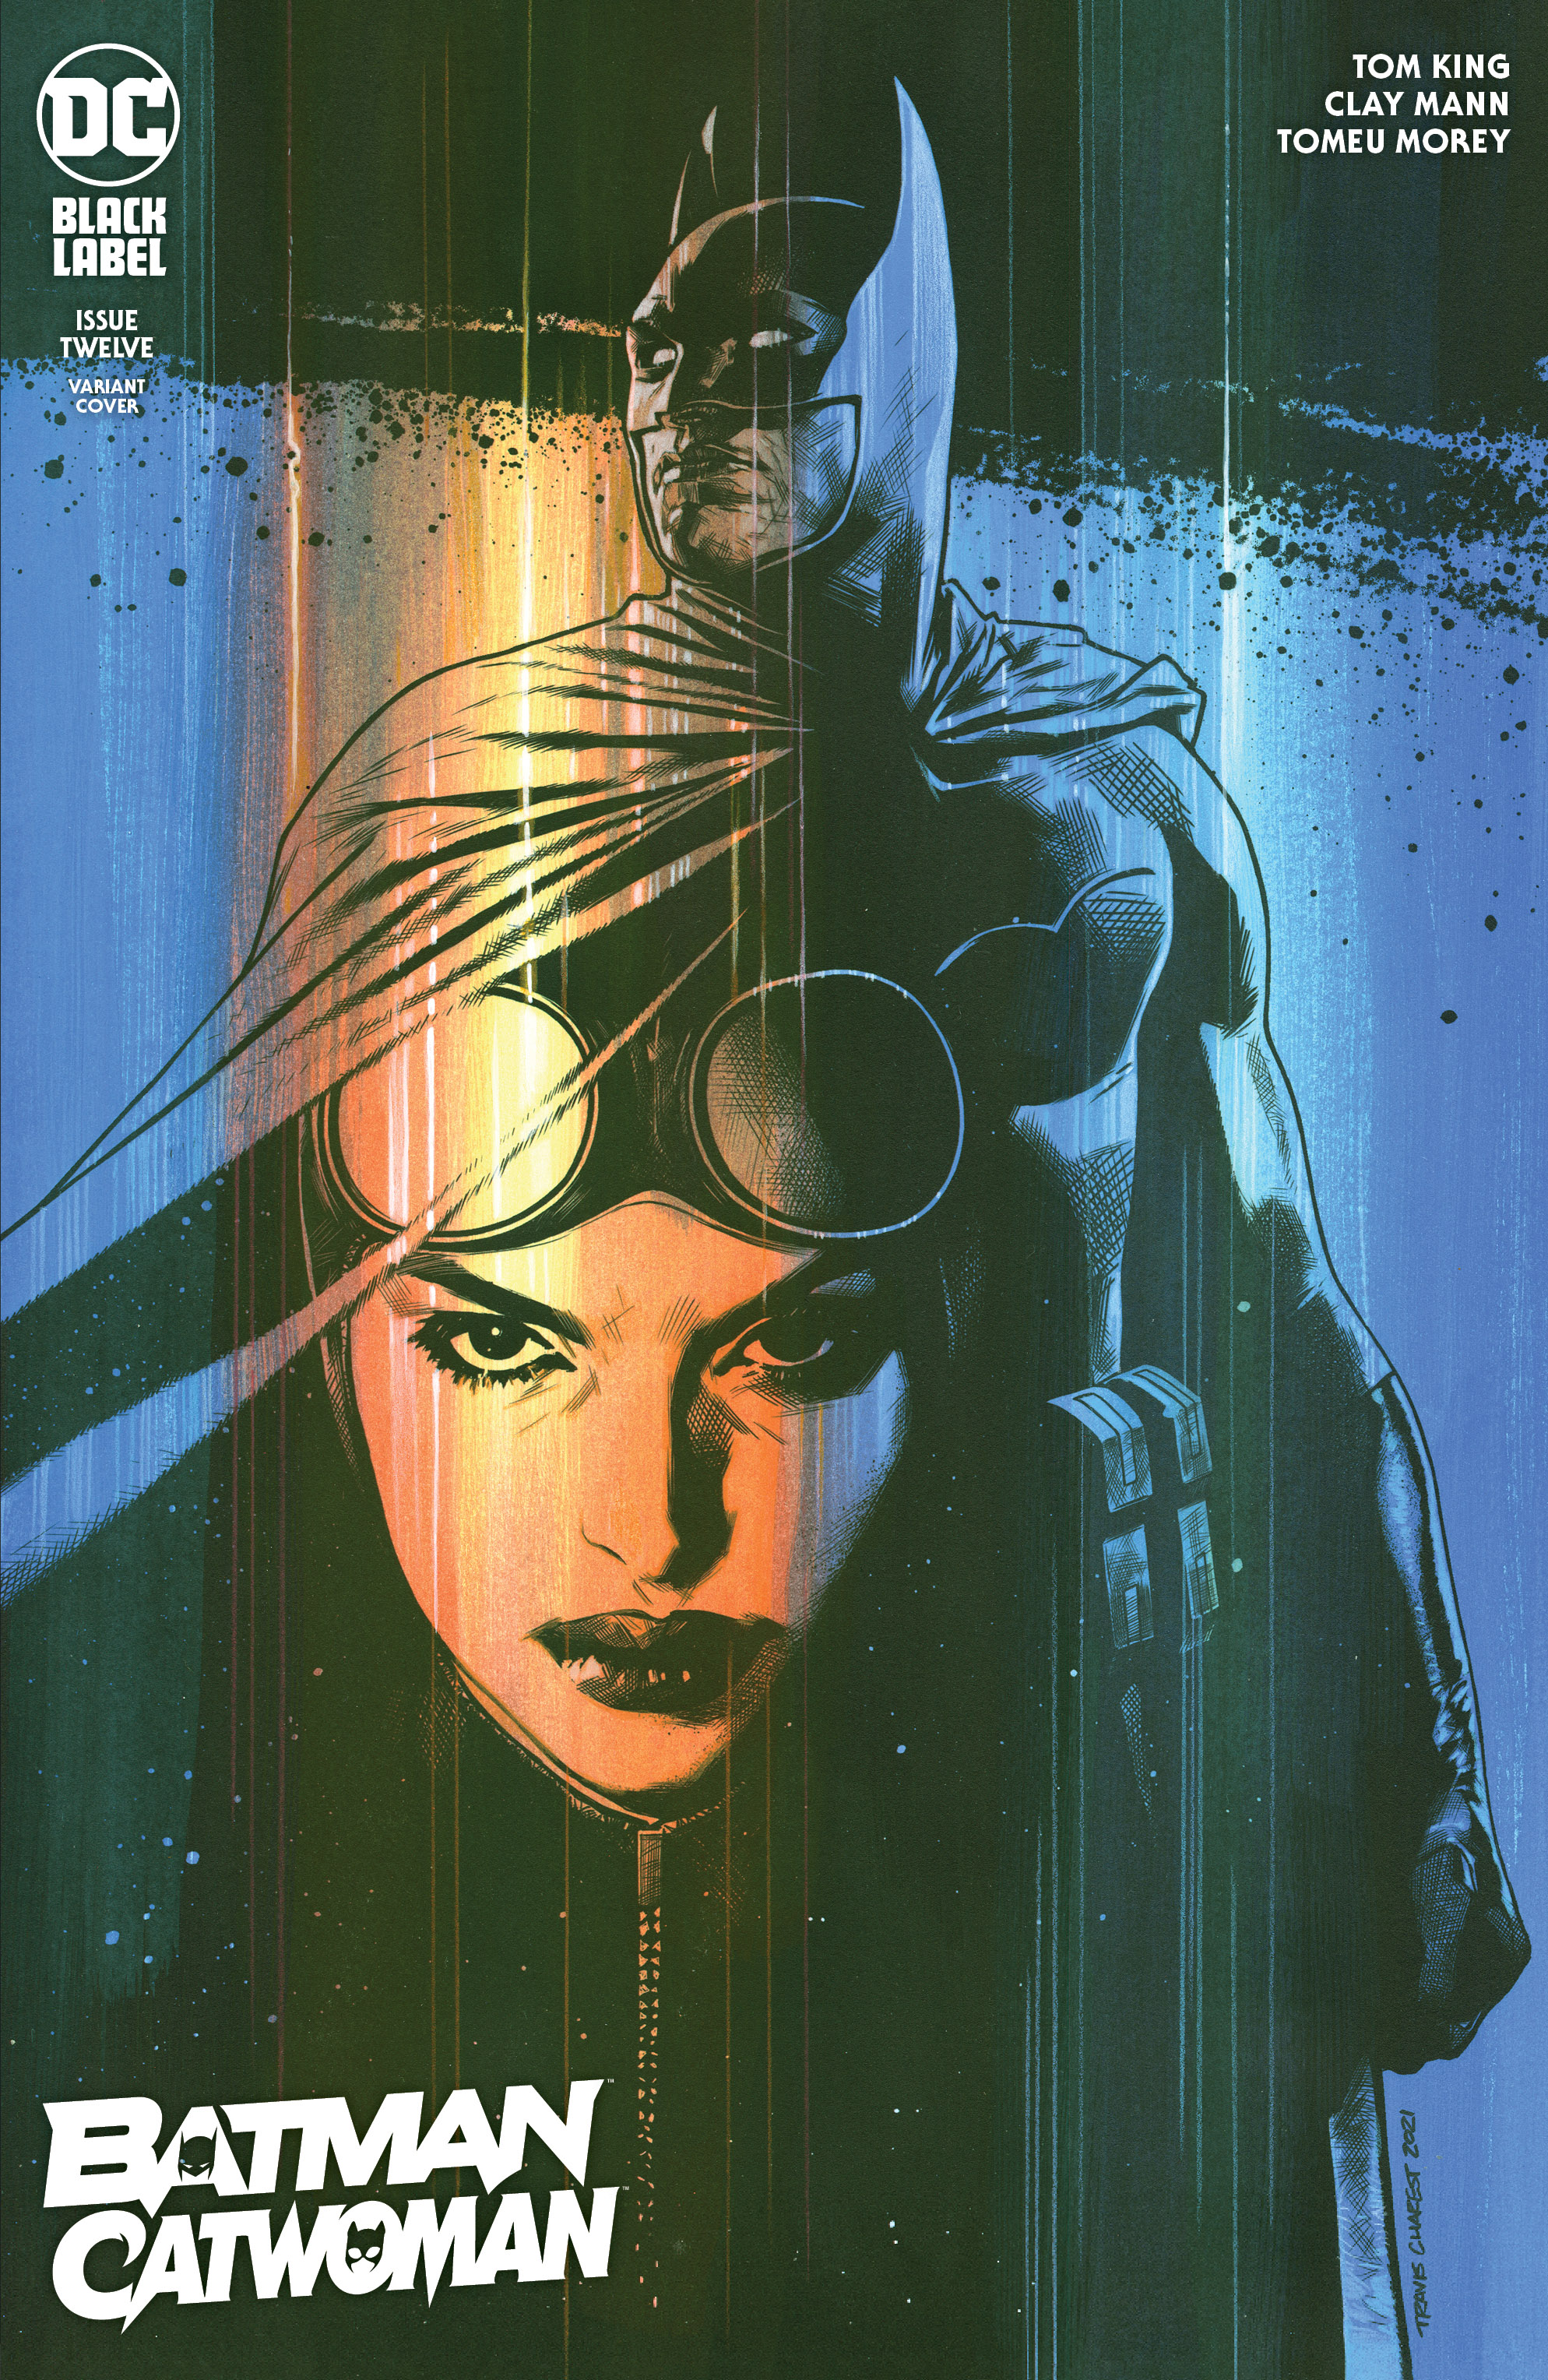 Batman Catwoman #12 (Of 12) Cover C Travis Charest Variant (Mature)